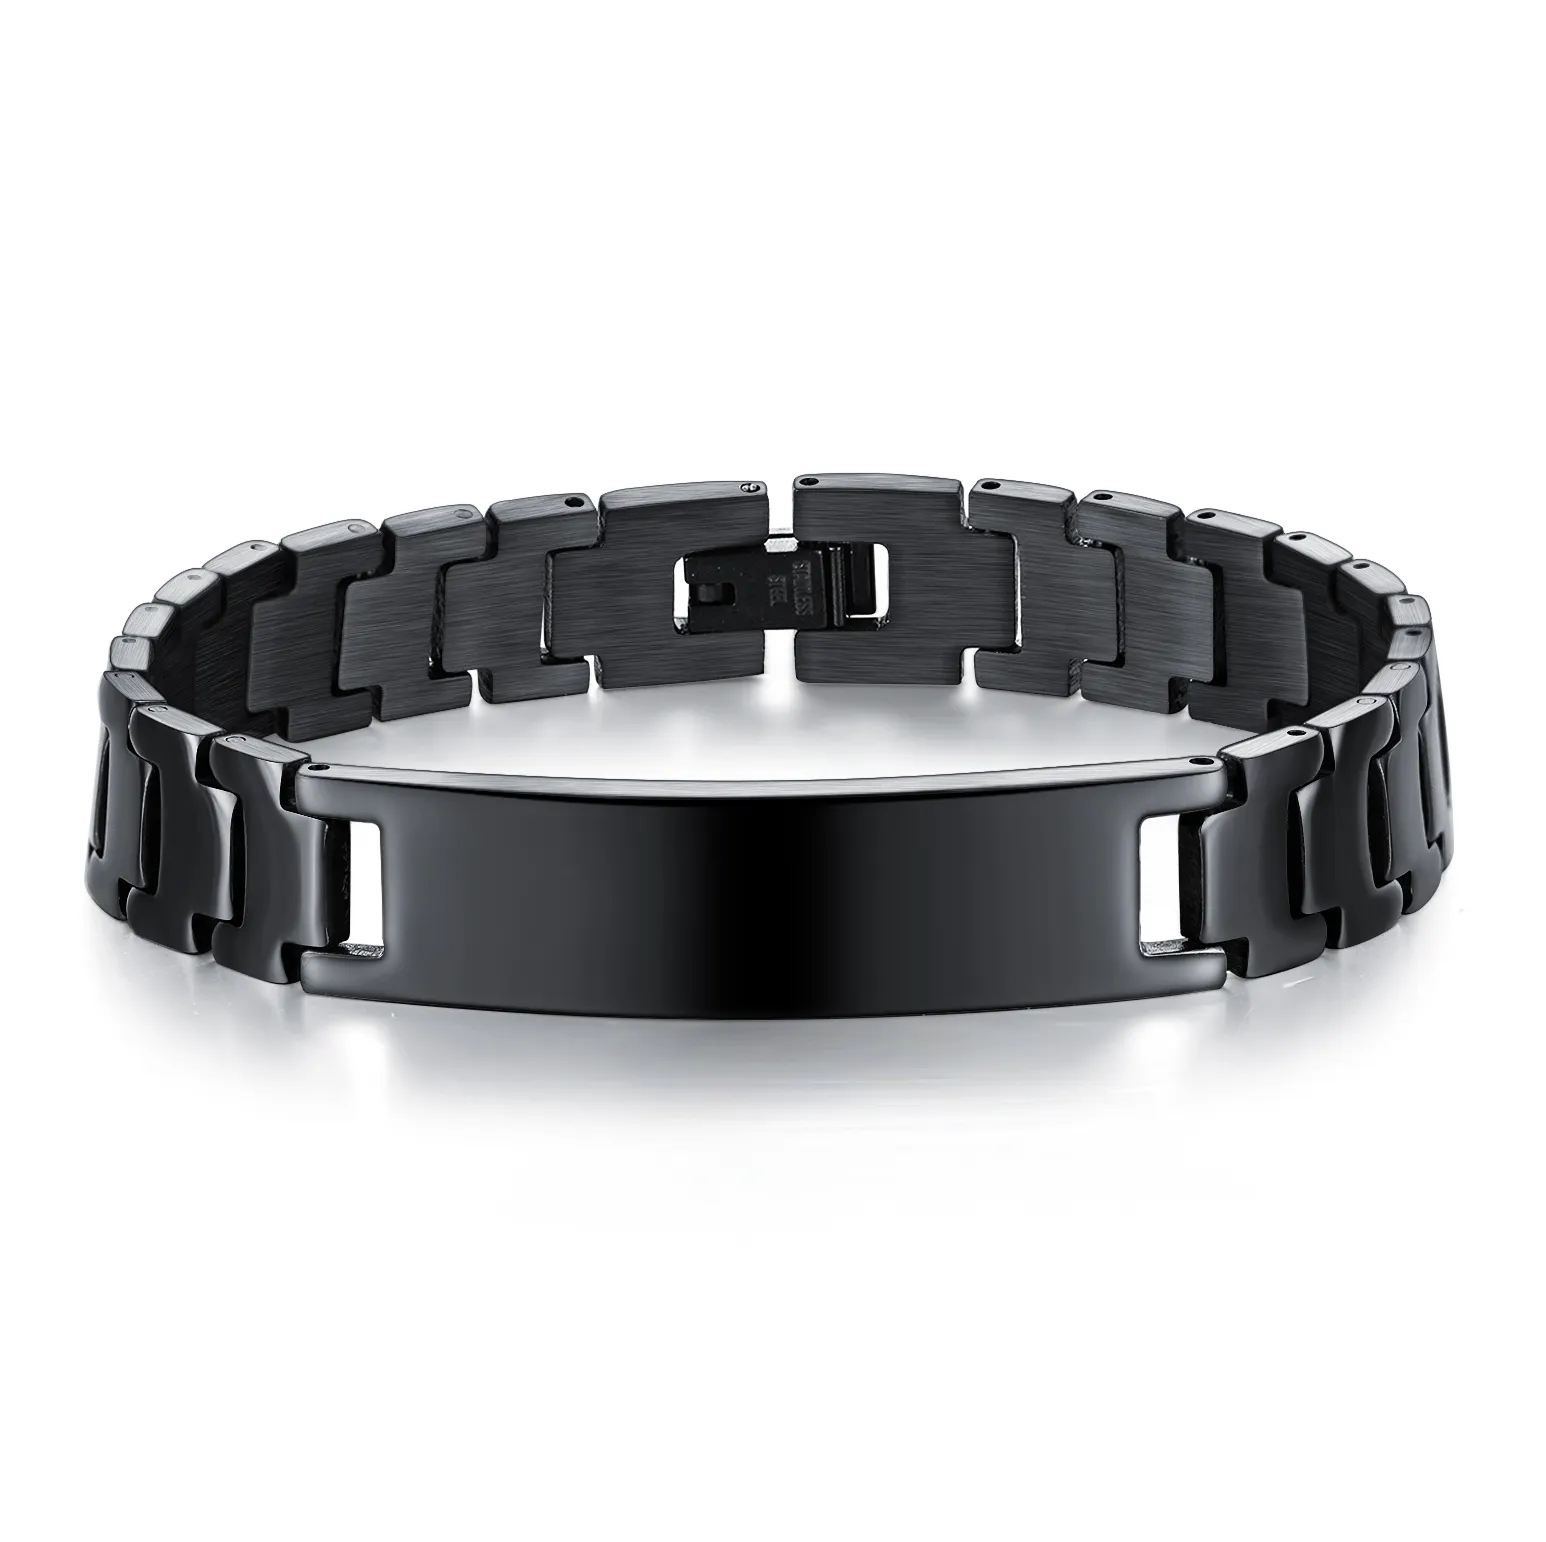 12mm Personalized Identification Name Plate Bangle Bracelet for Men Boys Black Blank Engravable Stainless Steel ID Bracelets